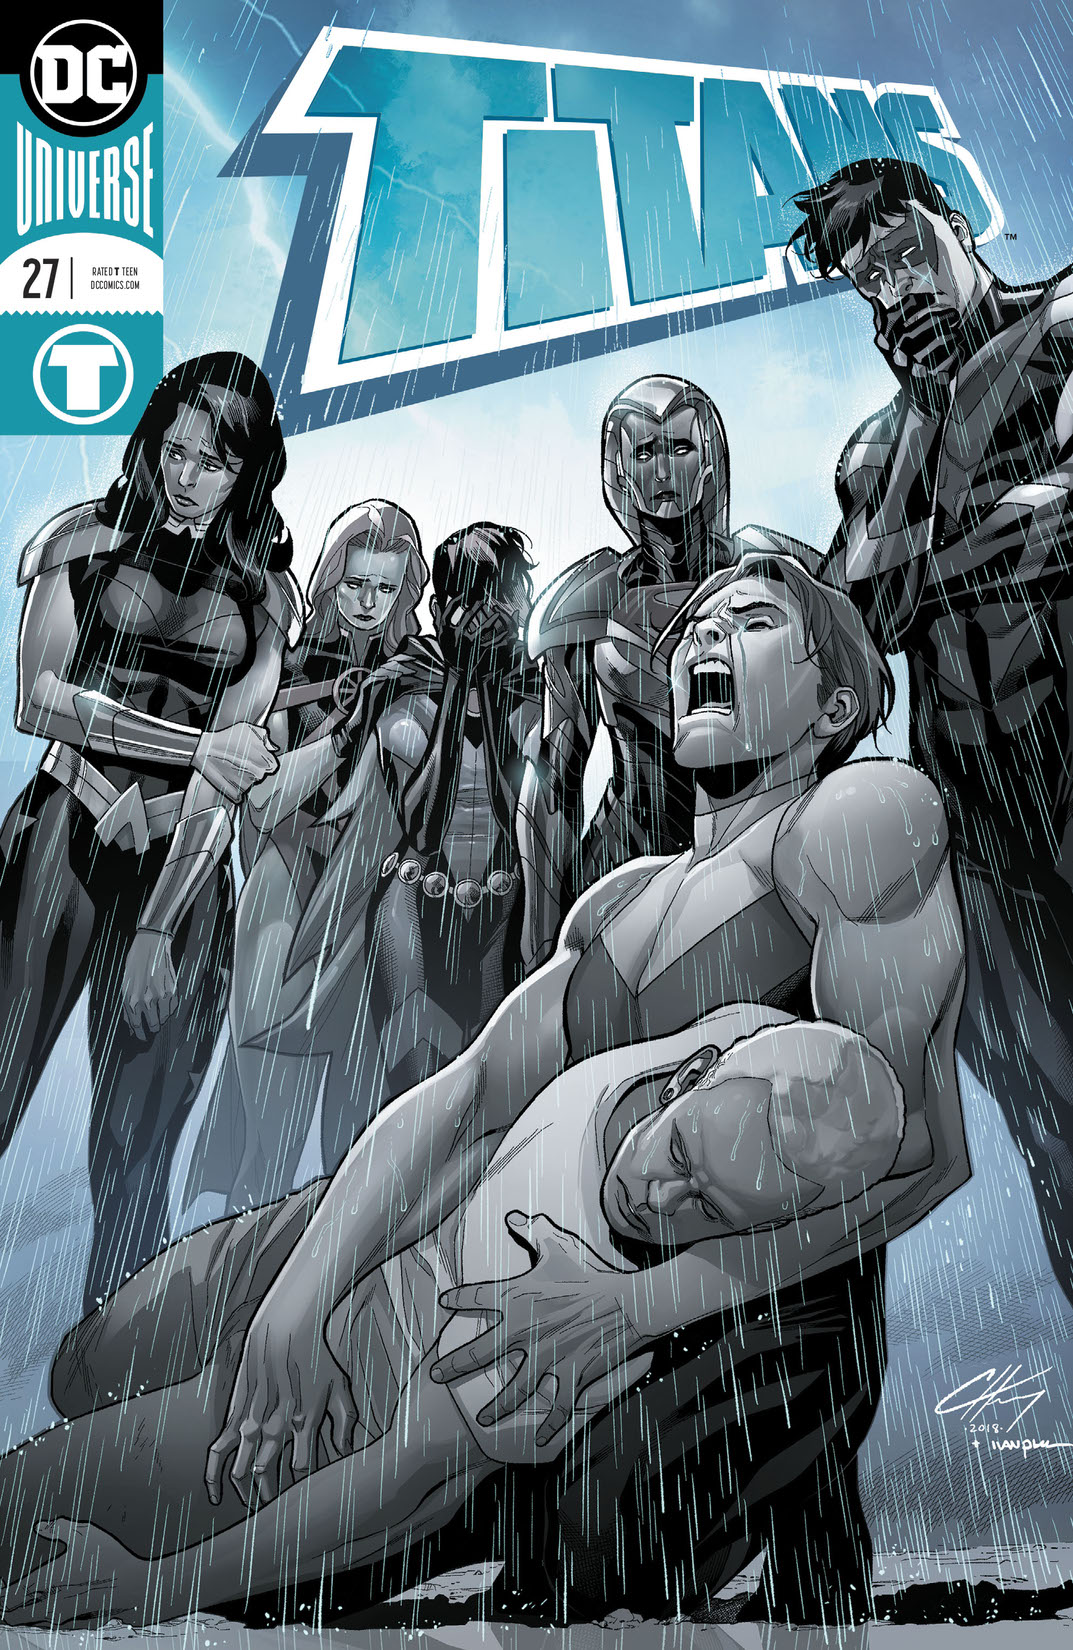 Titans (2016-) #27 preview images